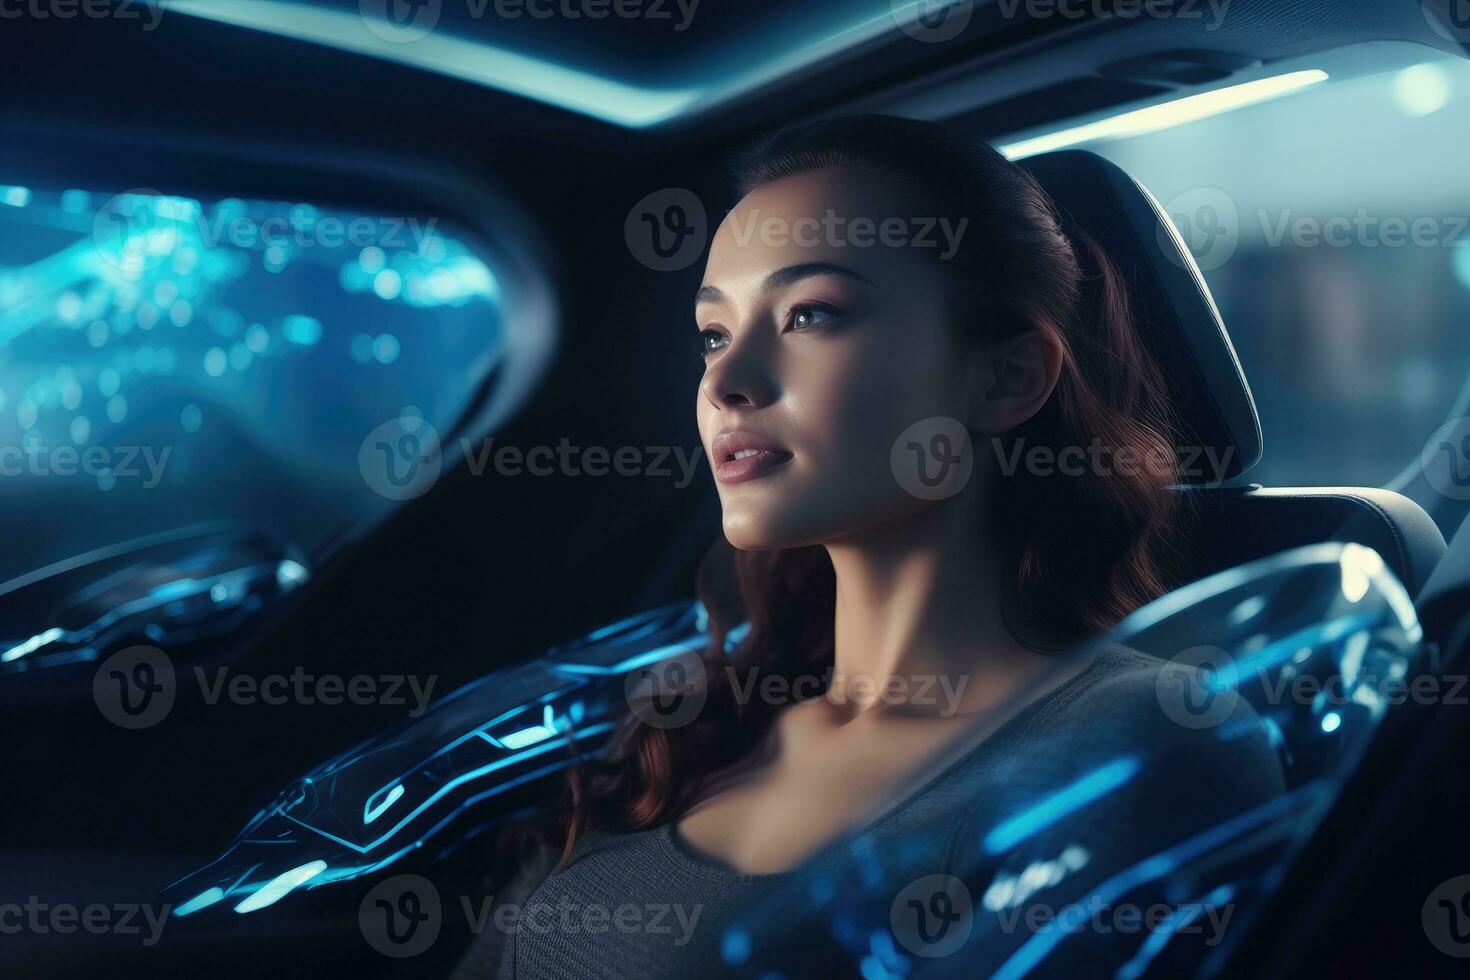 A close - up shot of a woman sitting inside a cutting - edge autonomous vehicle. Generative AI photo